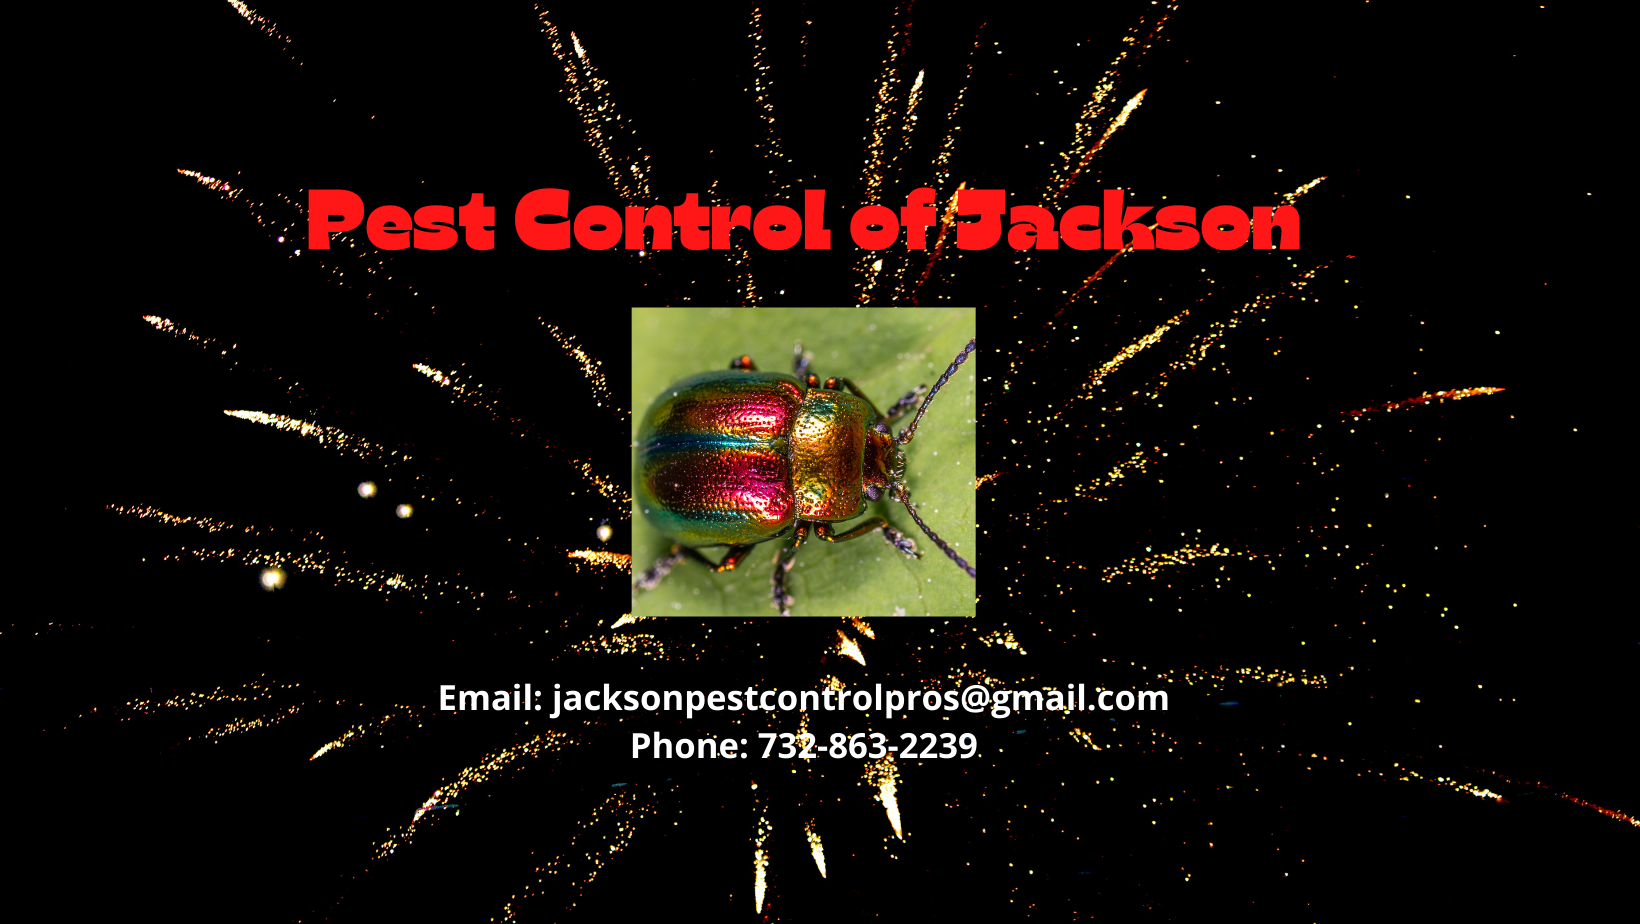 Pest Control of Jackson